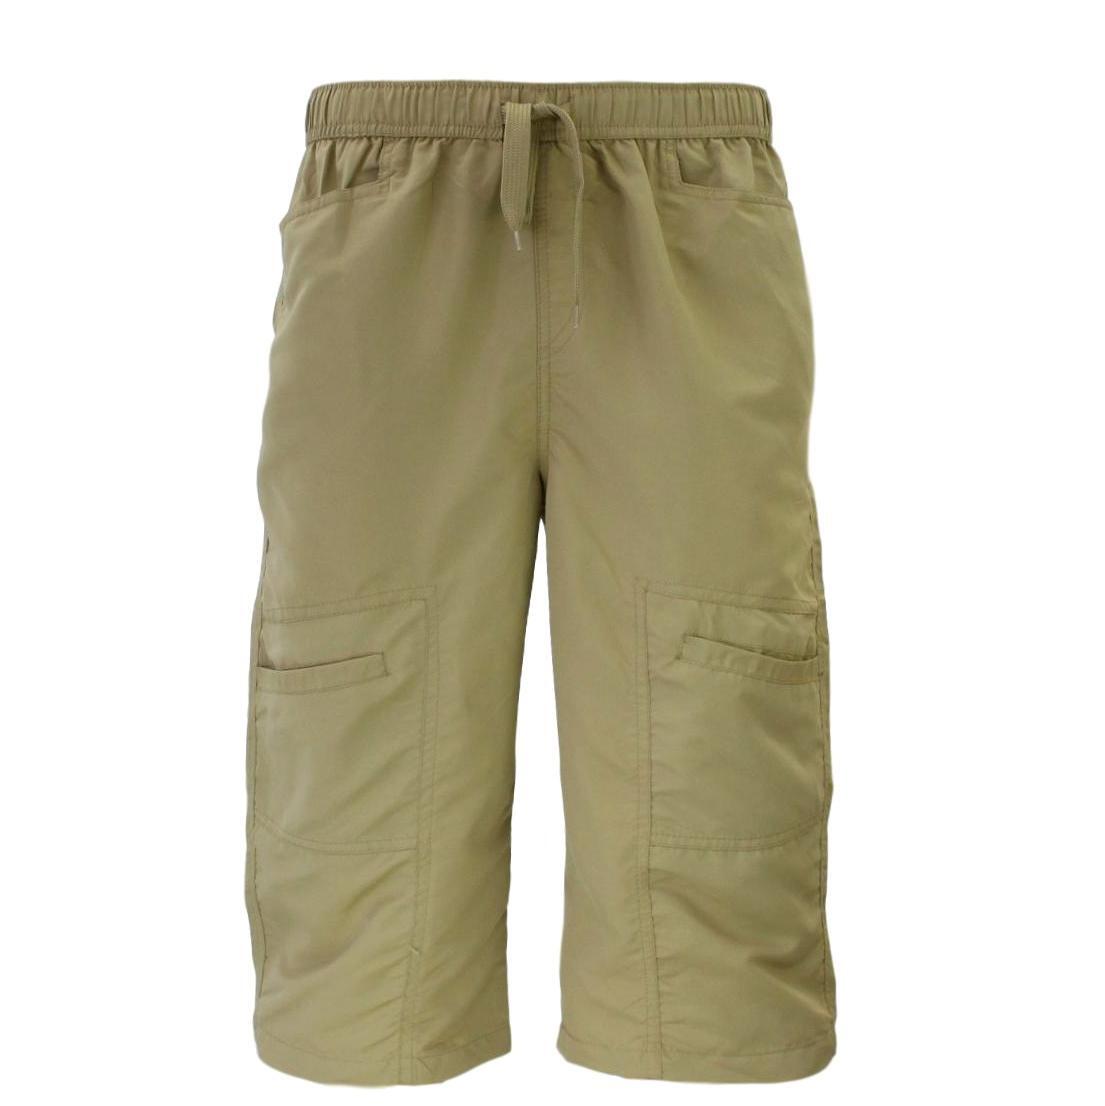 Mens 3/4 Cargo Long Shorts Multi Pocket Elastic Waist Drawstring | eBay